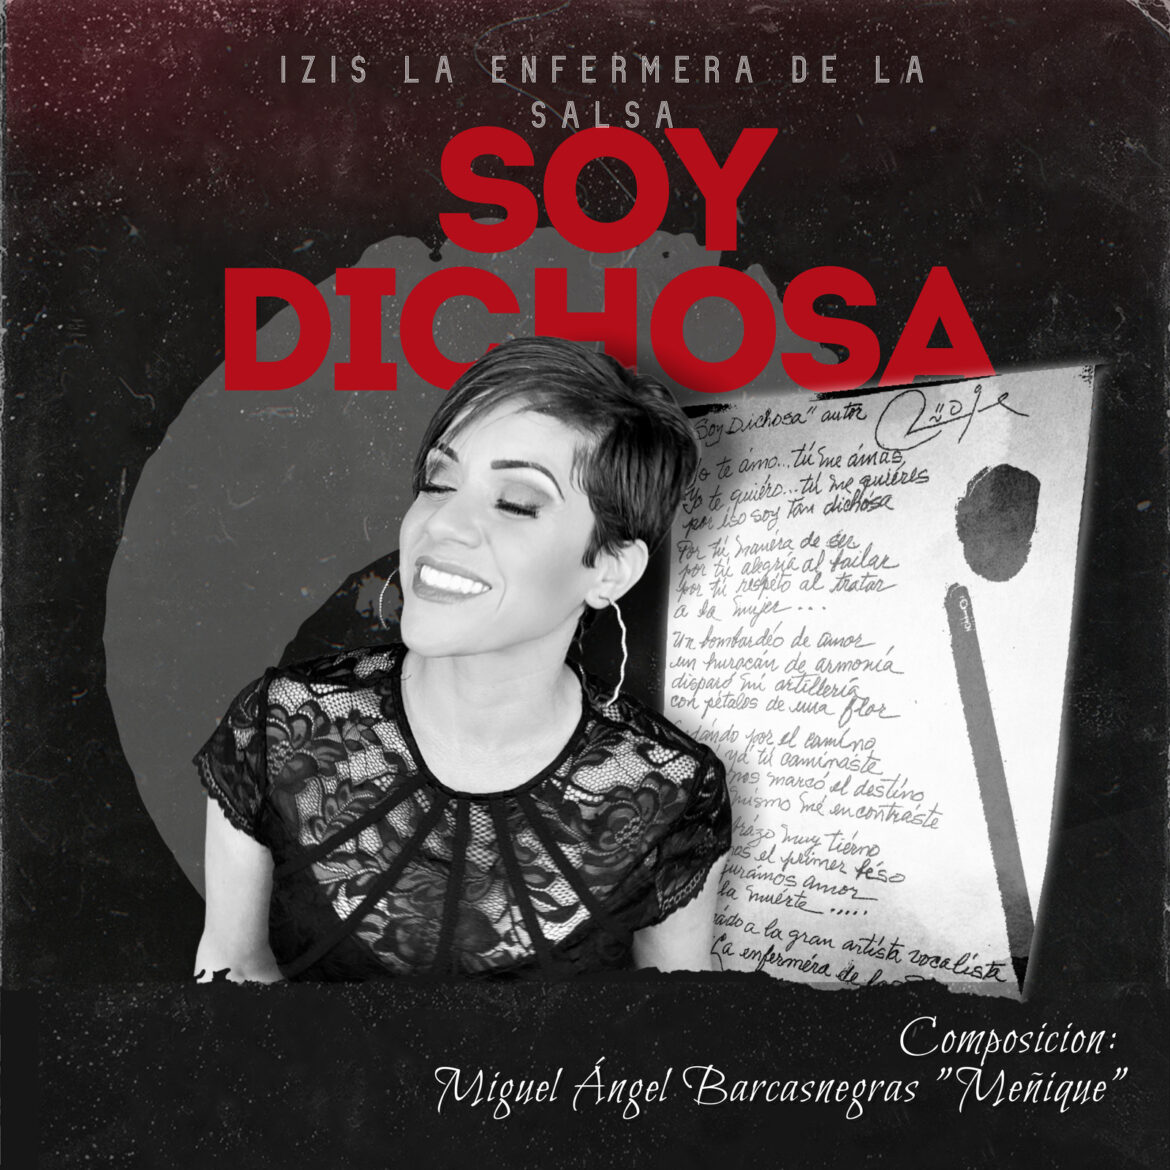 Izis La Enfermera de la Salsa presenta nuevo sencillo “Soy Dichosa”